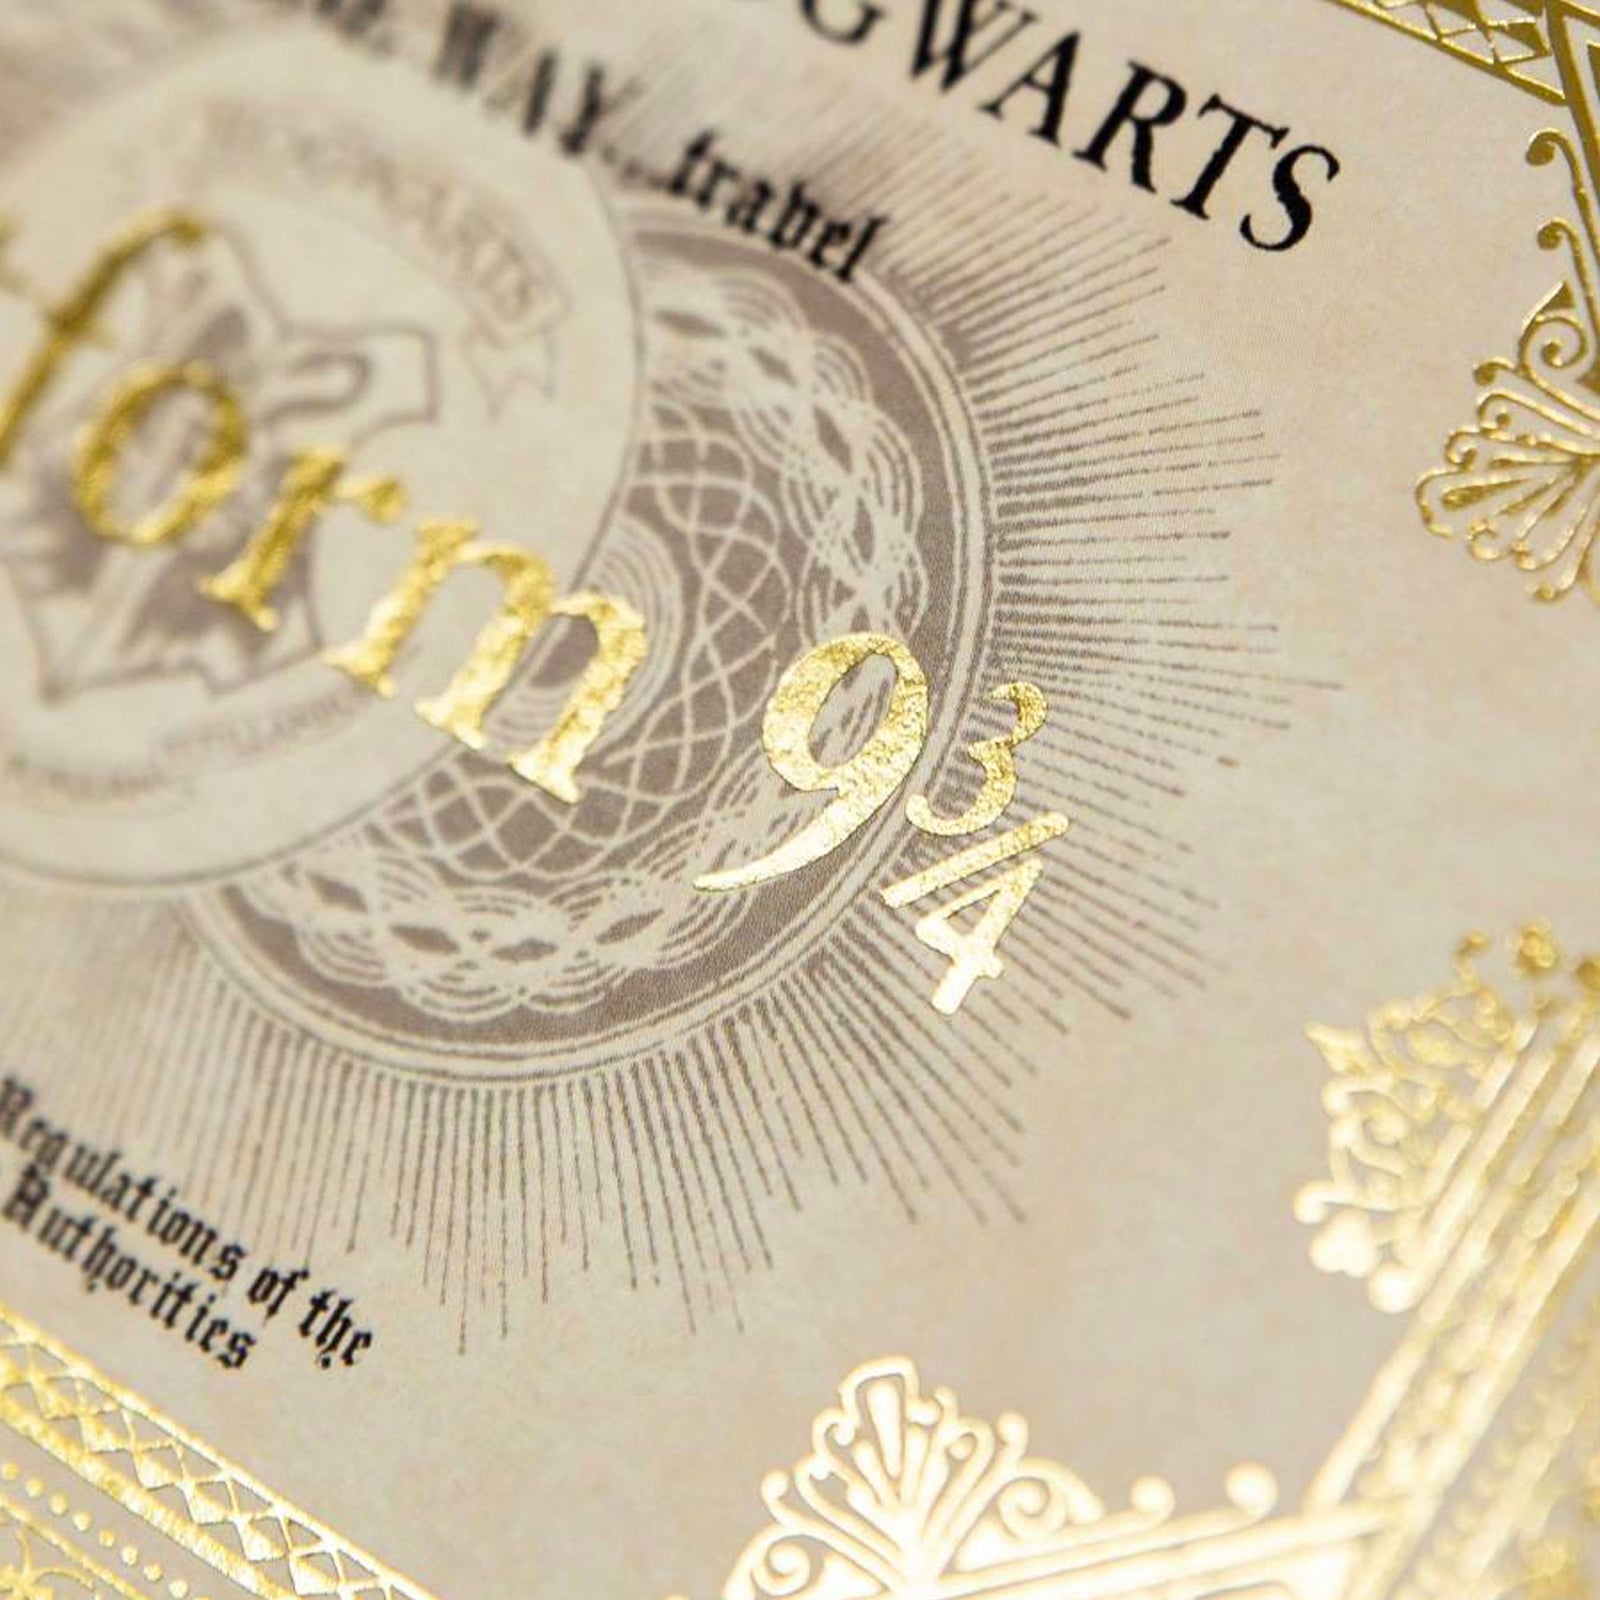 Hogwarts Express Ticket  Foiled Notecard